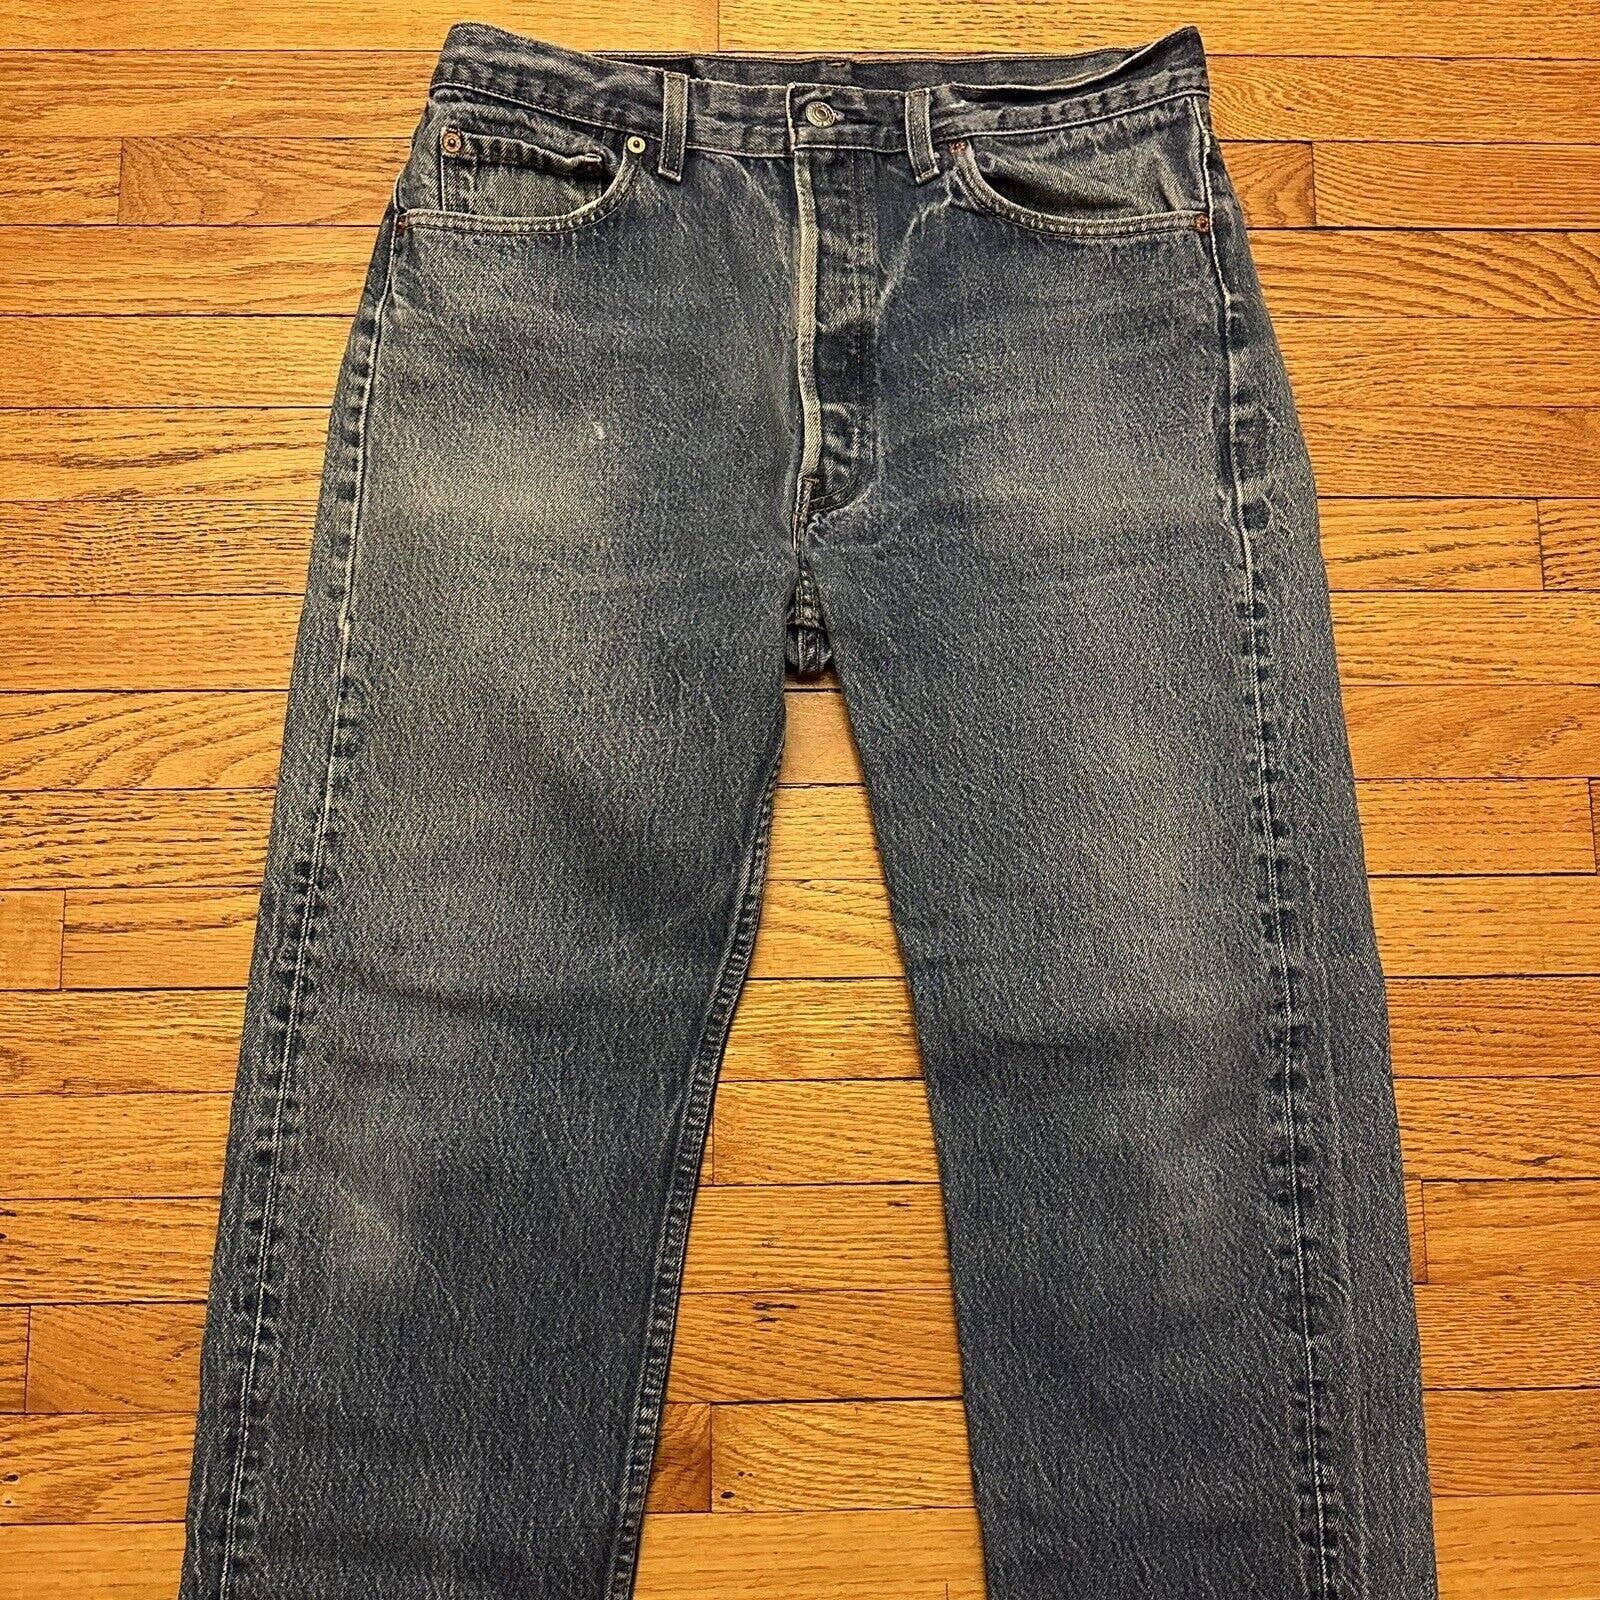 Vintage Vintage Levi’s 501 Blue Denim Jeans Size 36x34 Made In USA Size US 36 / EU 52 - 2 Preview